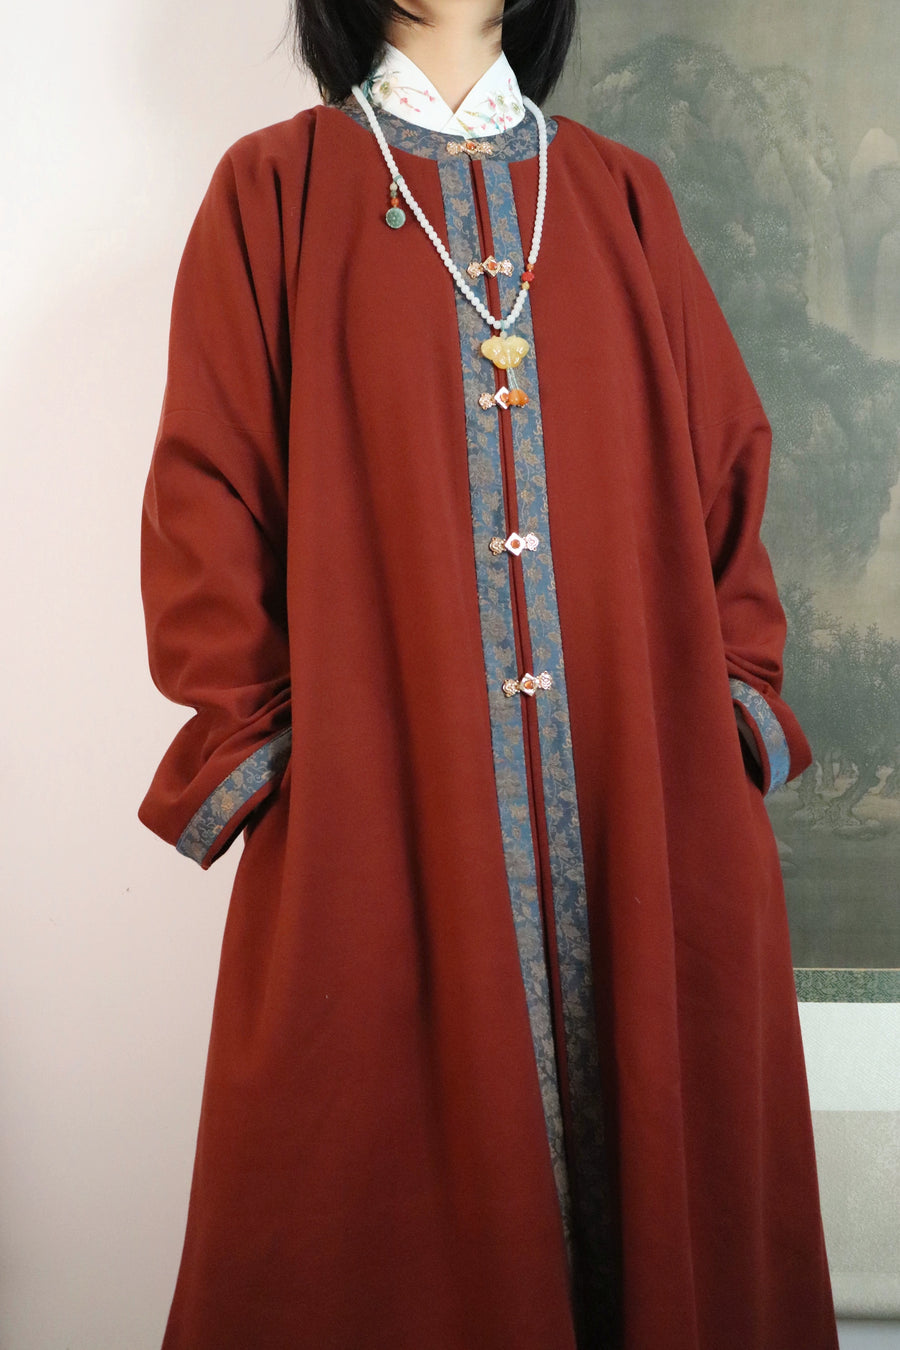 Wanli 万历 Wanli Era Ming Dynasty Round Collar Winter Coat